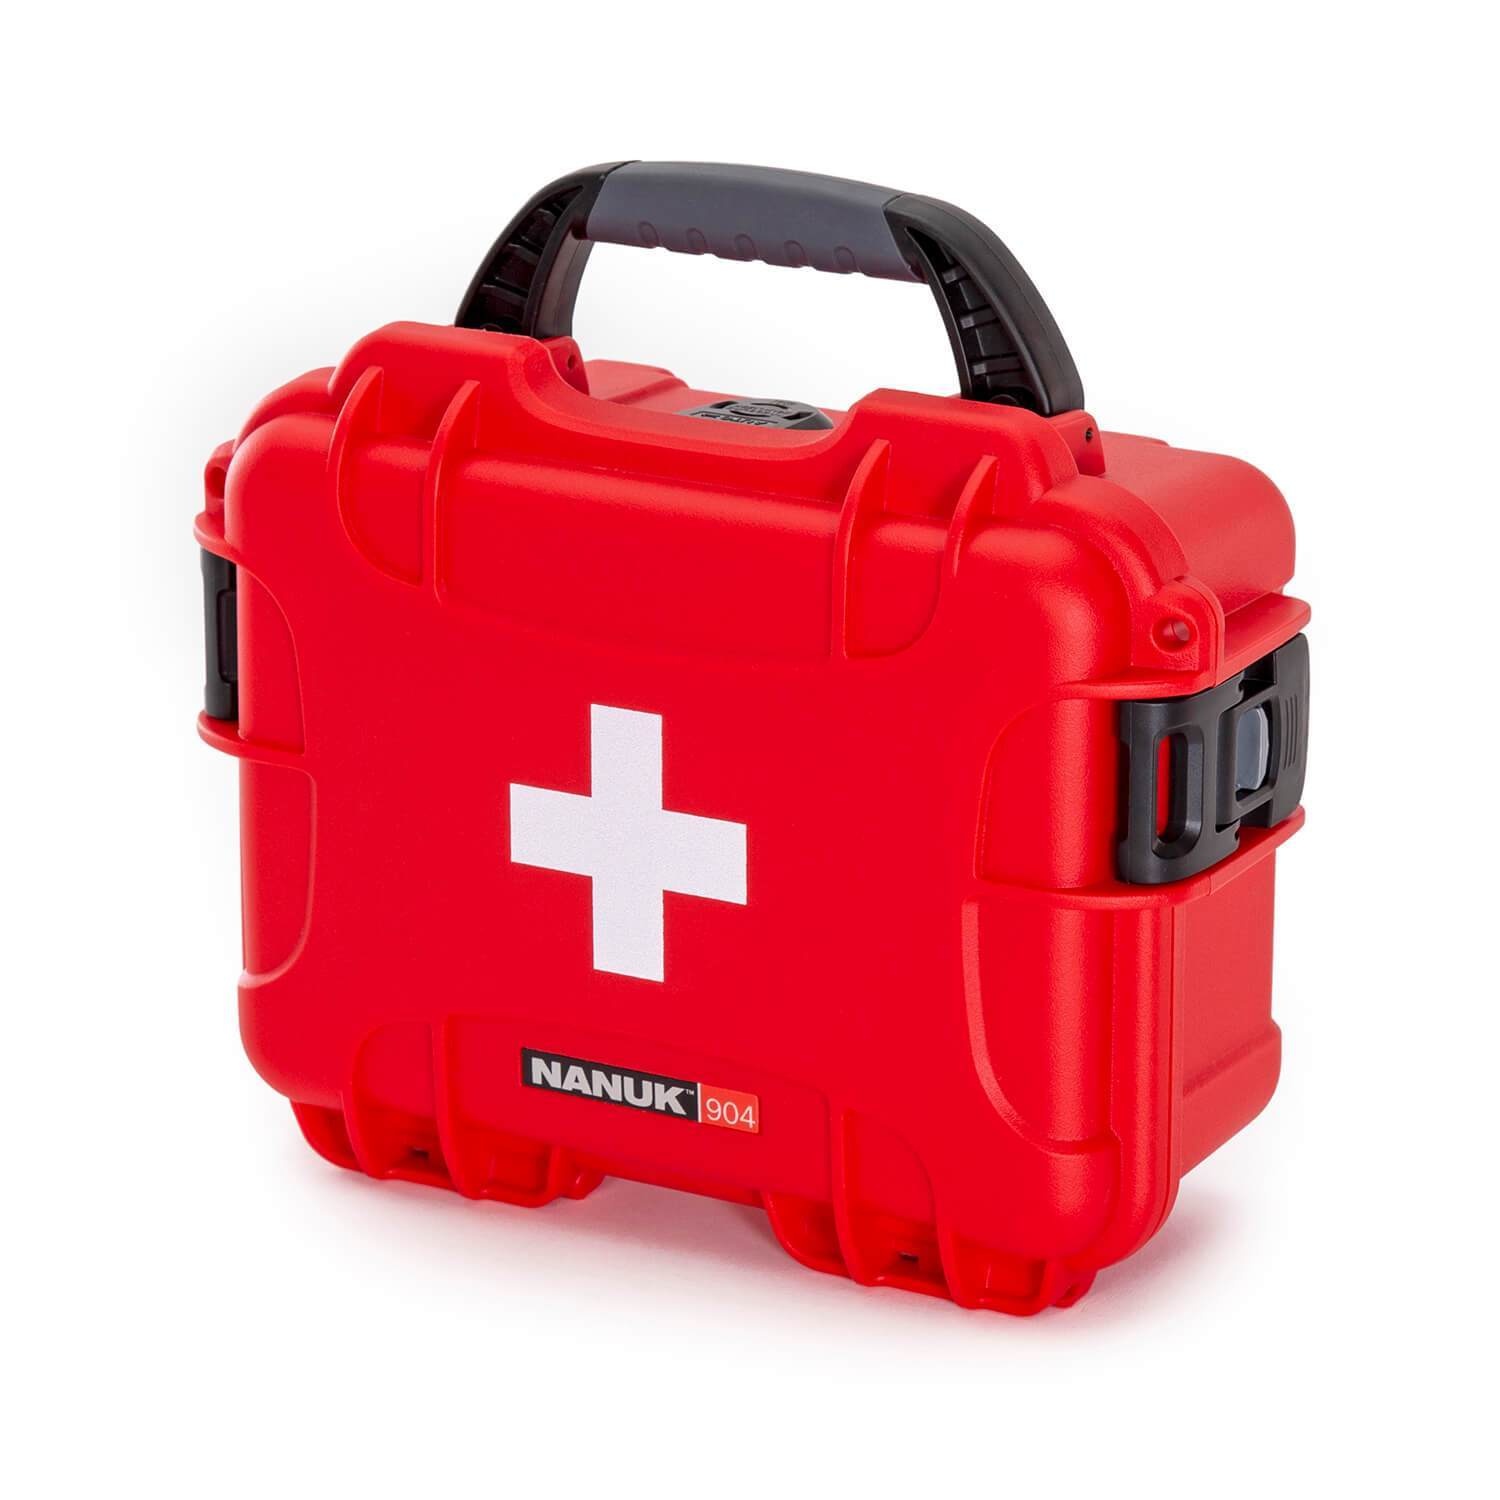 NANUK 904 First Aid Case - Erste-Hilfe Schutzkoffer